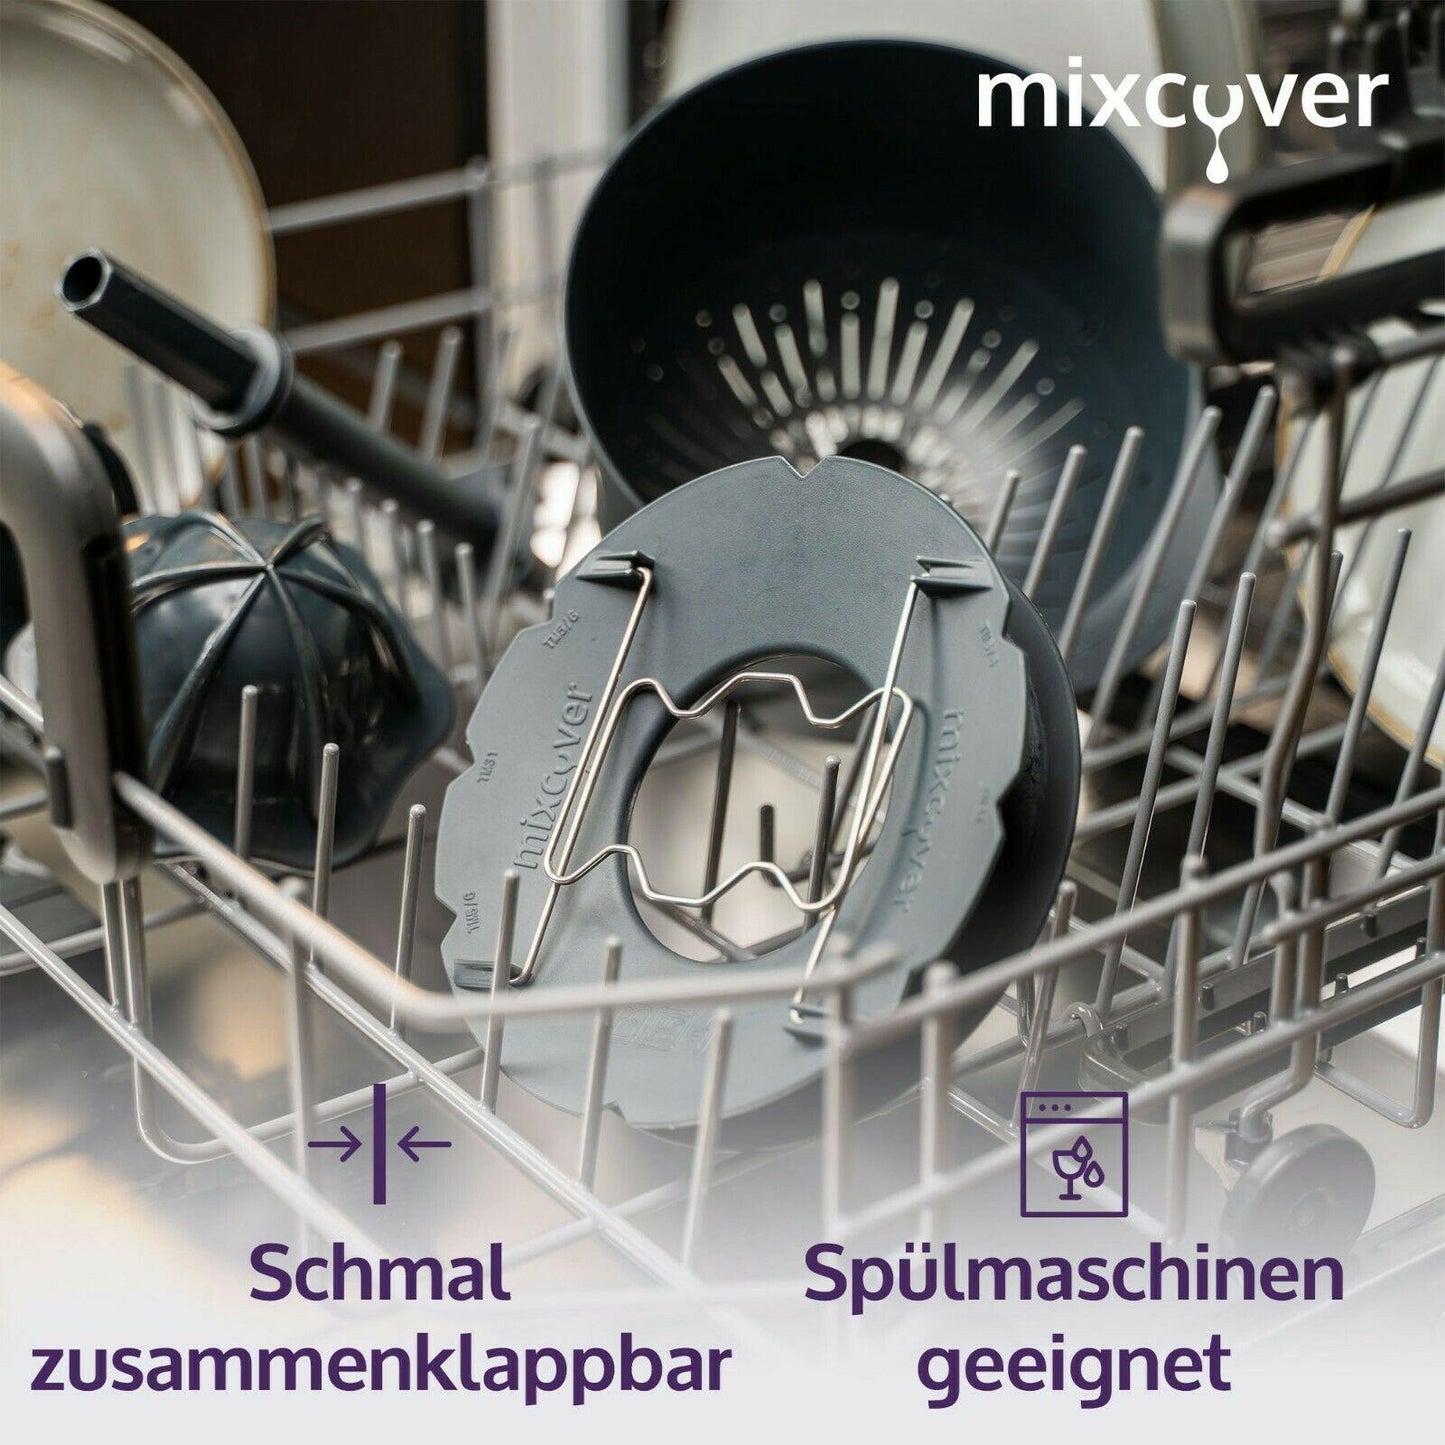 mixcover Mixtopf Verkleinerung für Thermomix TM31 Häcksel Helfer, Pürieren - Mixcover - Mixcover